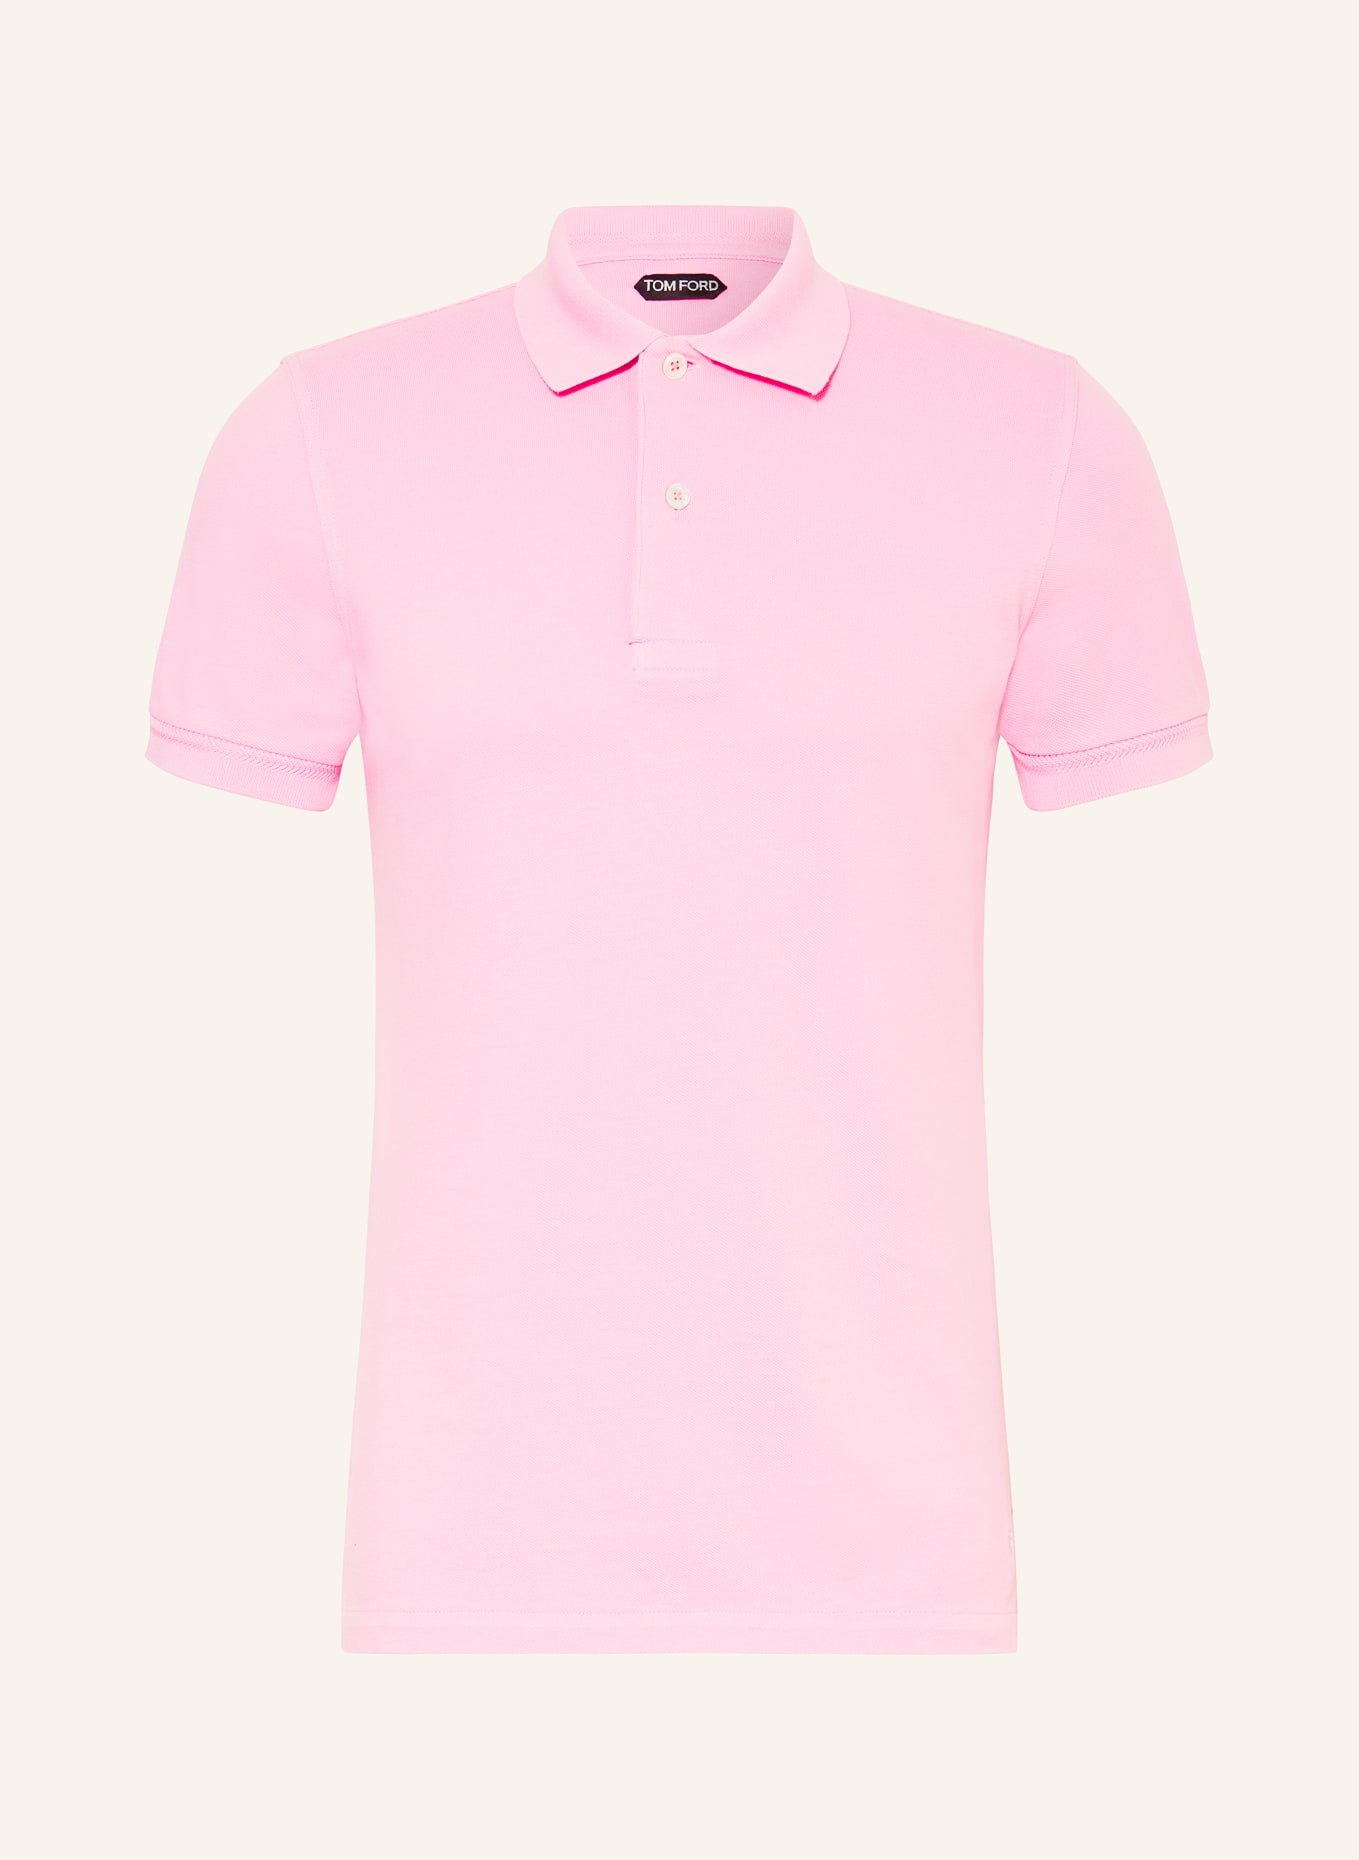 TOM FORD Piqué-Poloshirt, Farbe: PINK (Bild 1)